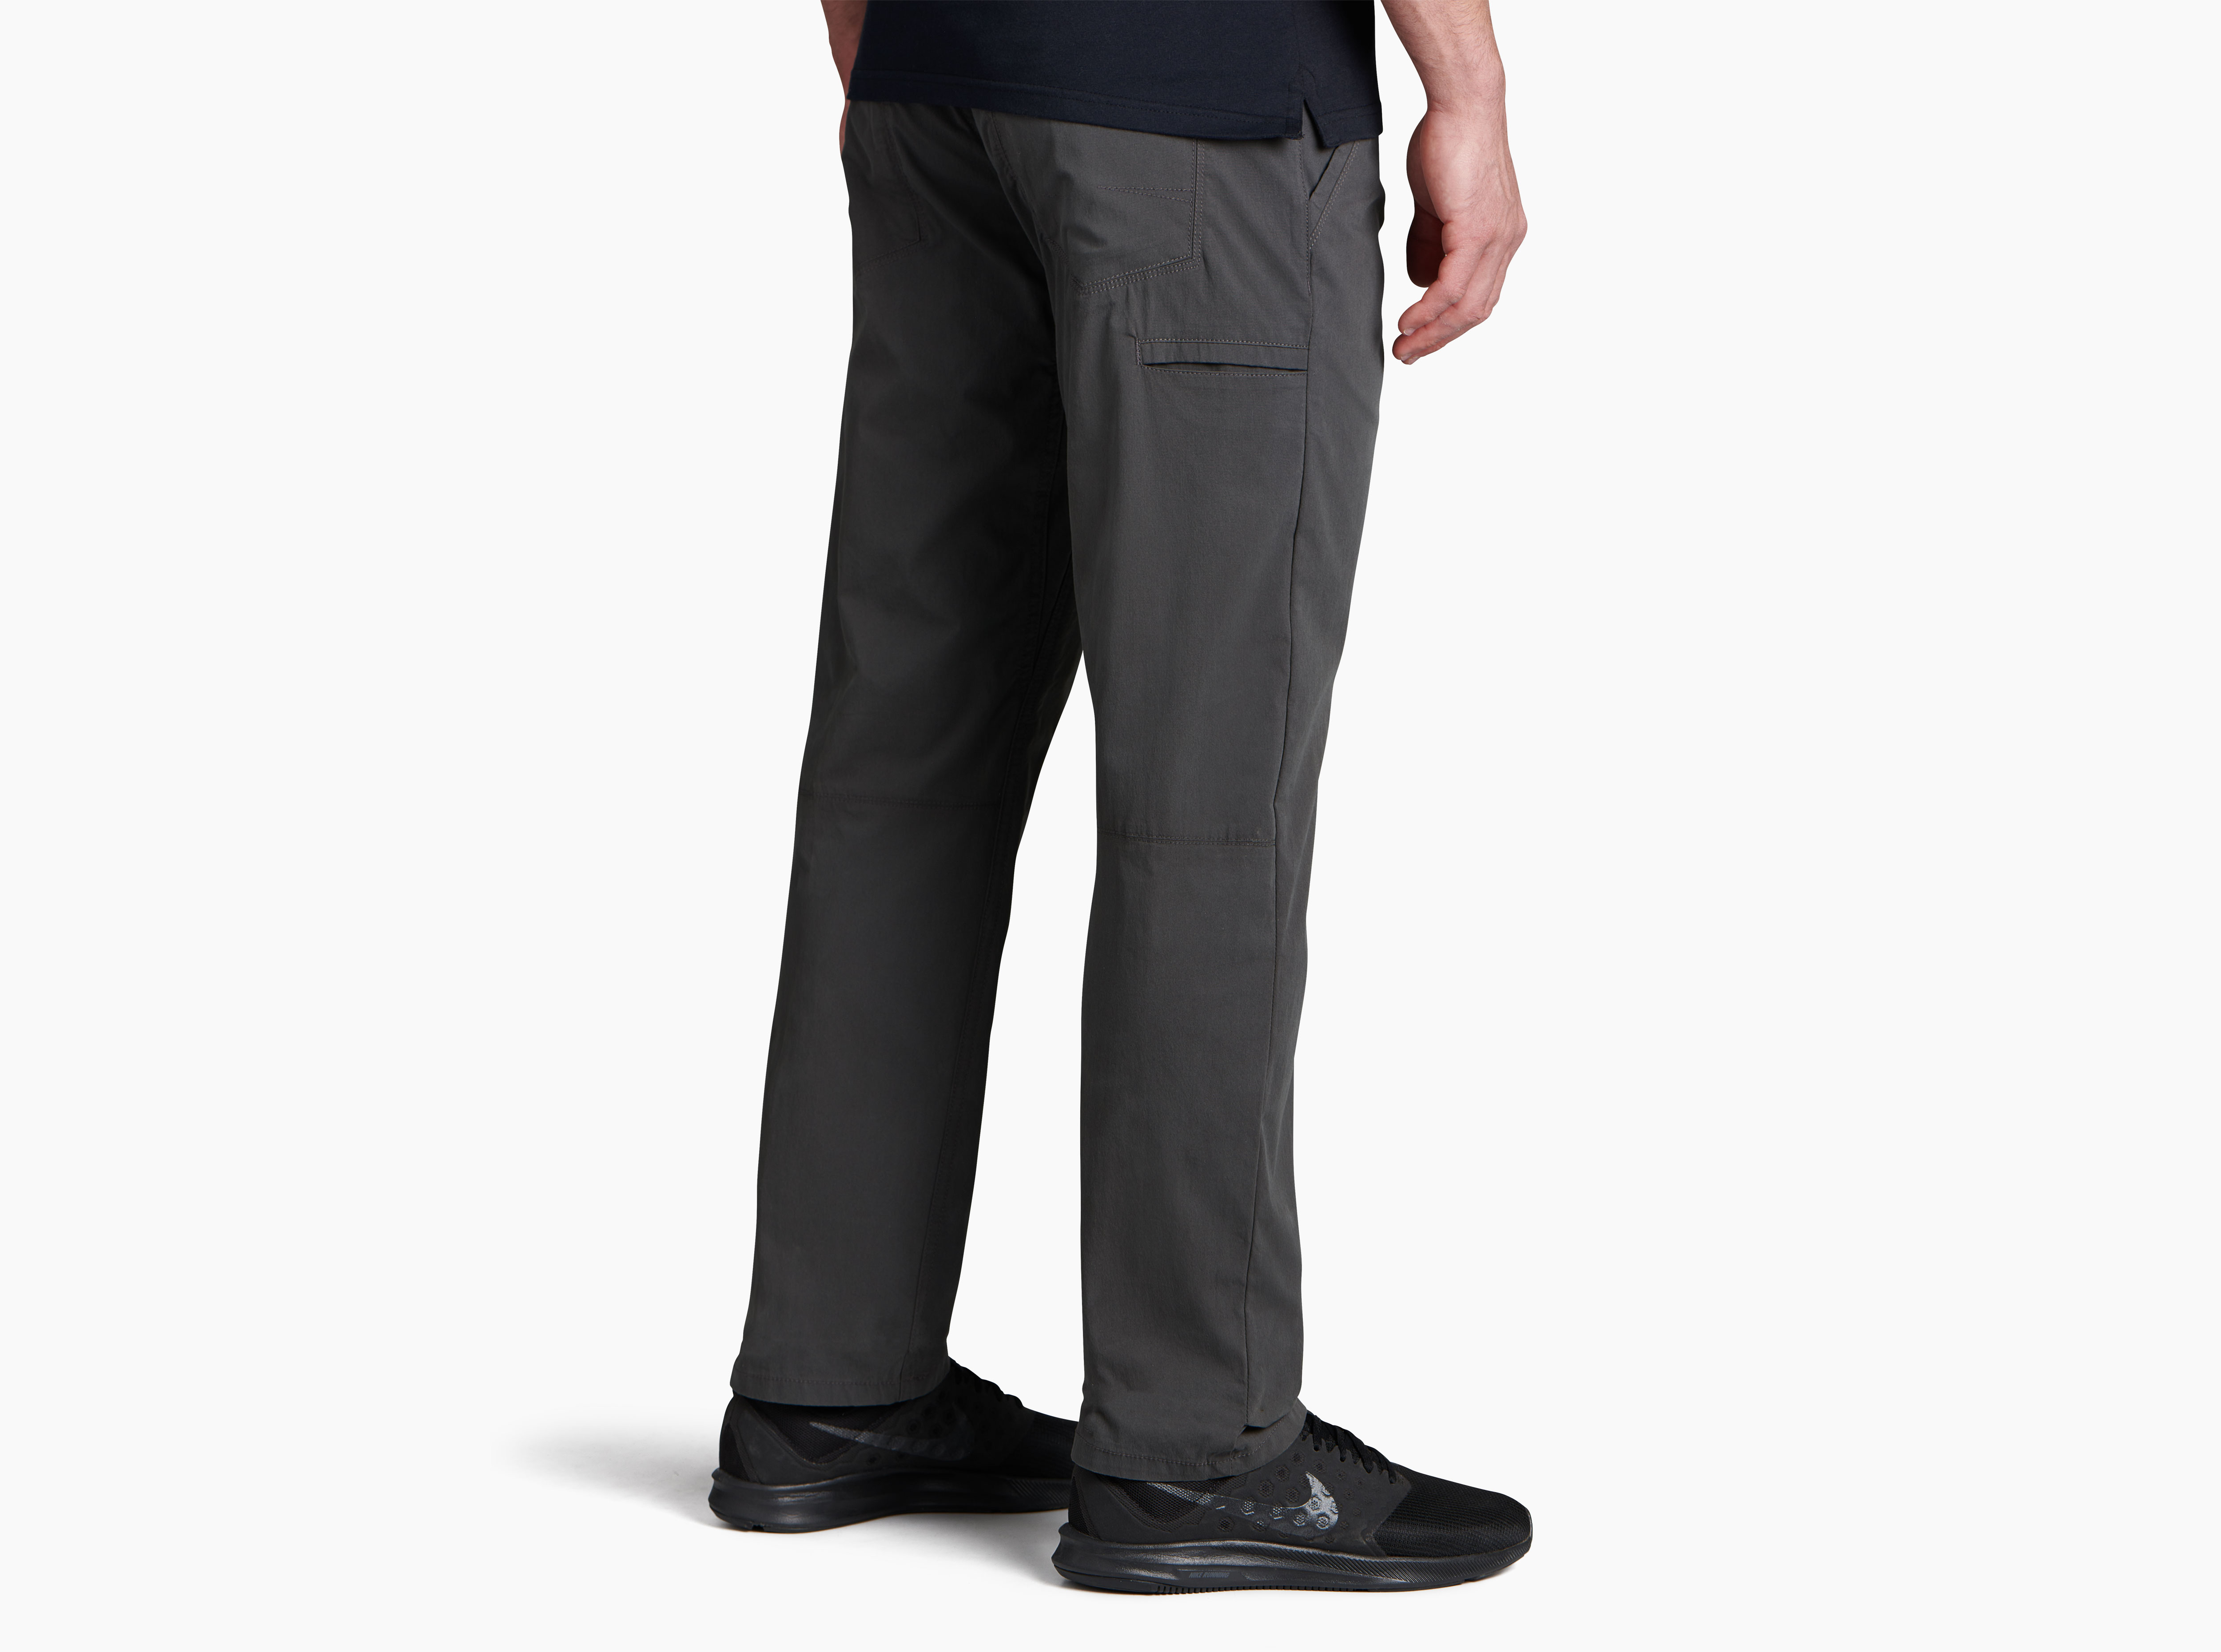 Kuhl Slax Pants Mens Size 35x30 (actual 35x29) | eBay